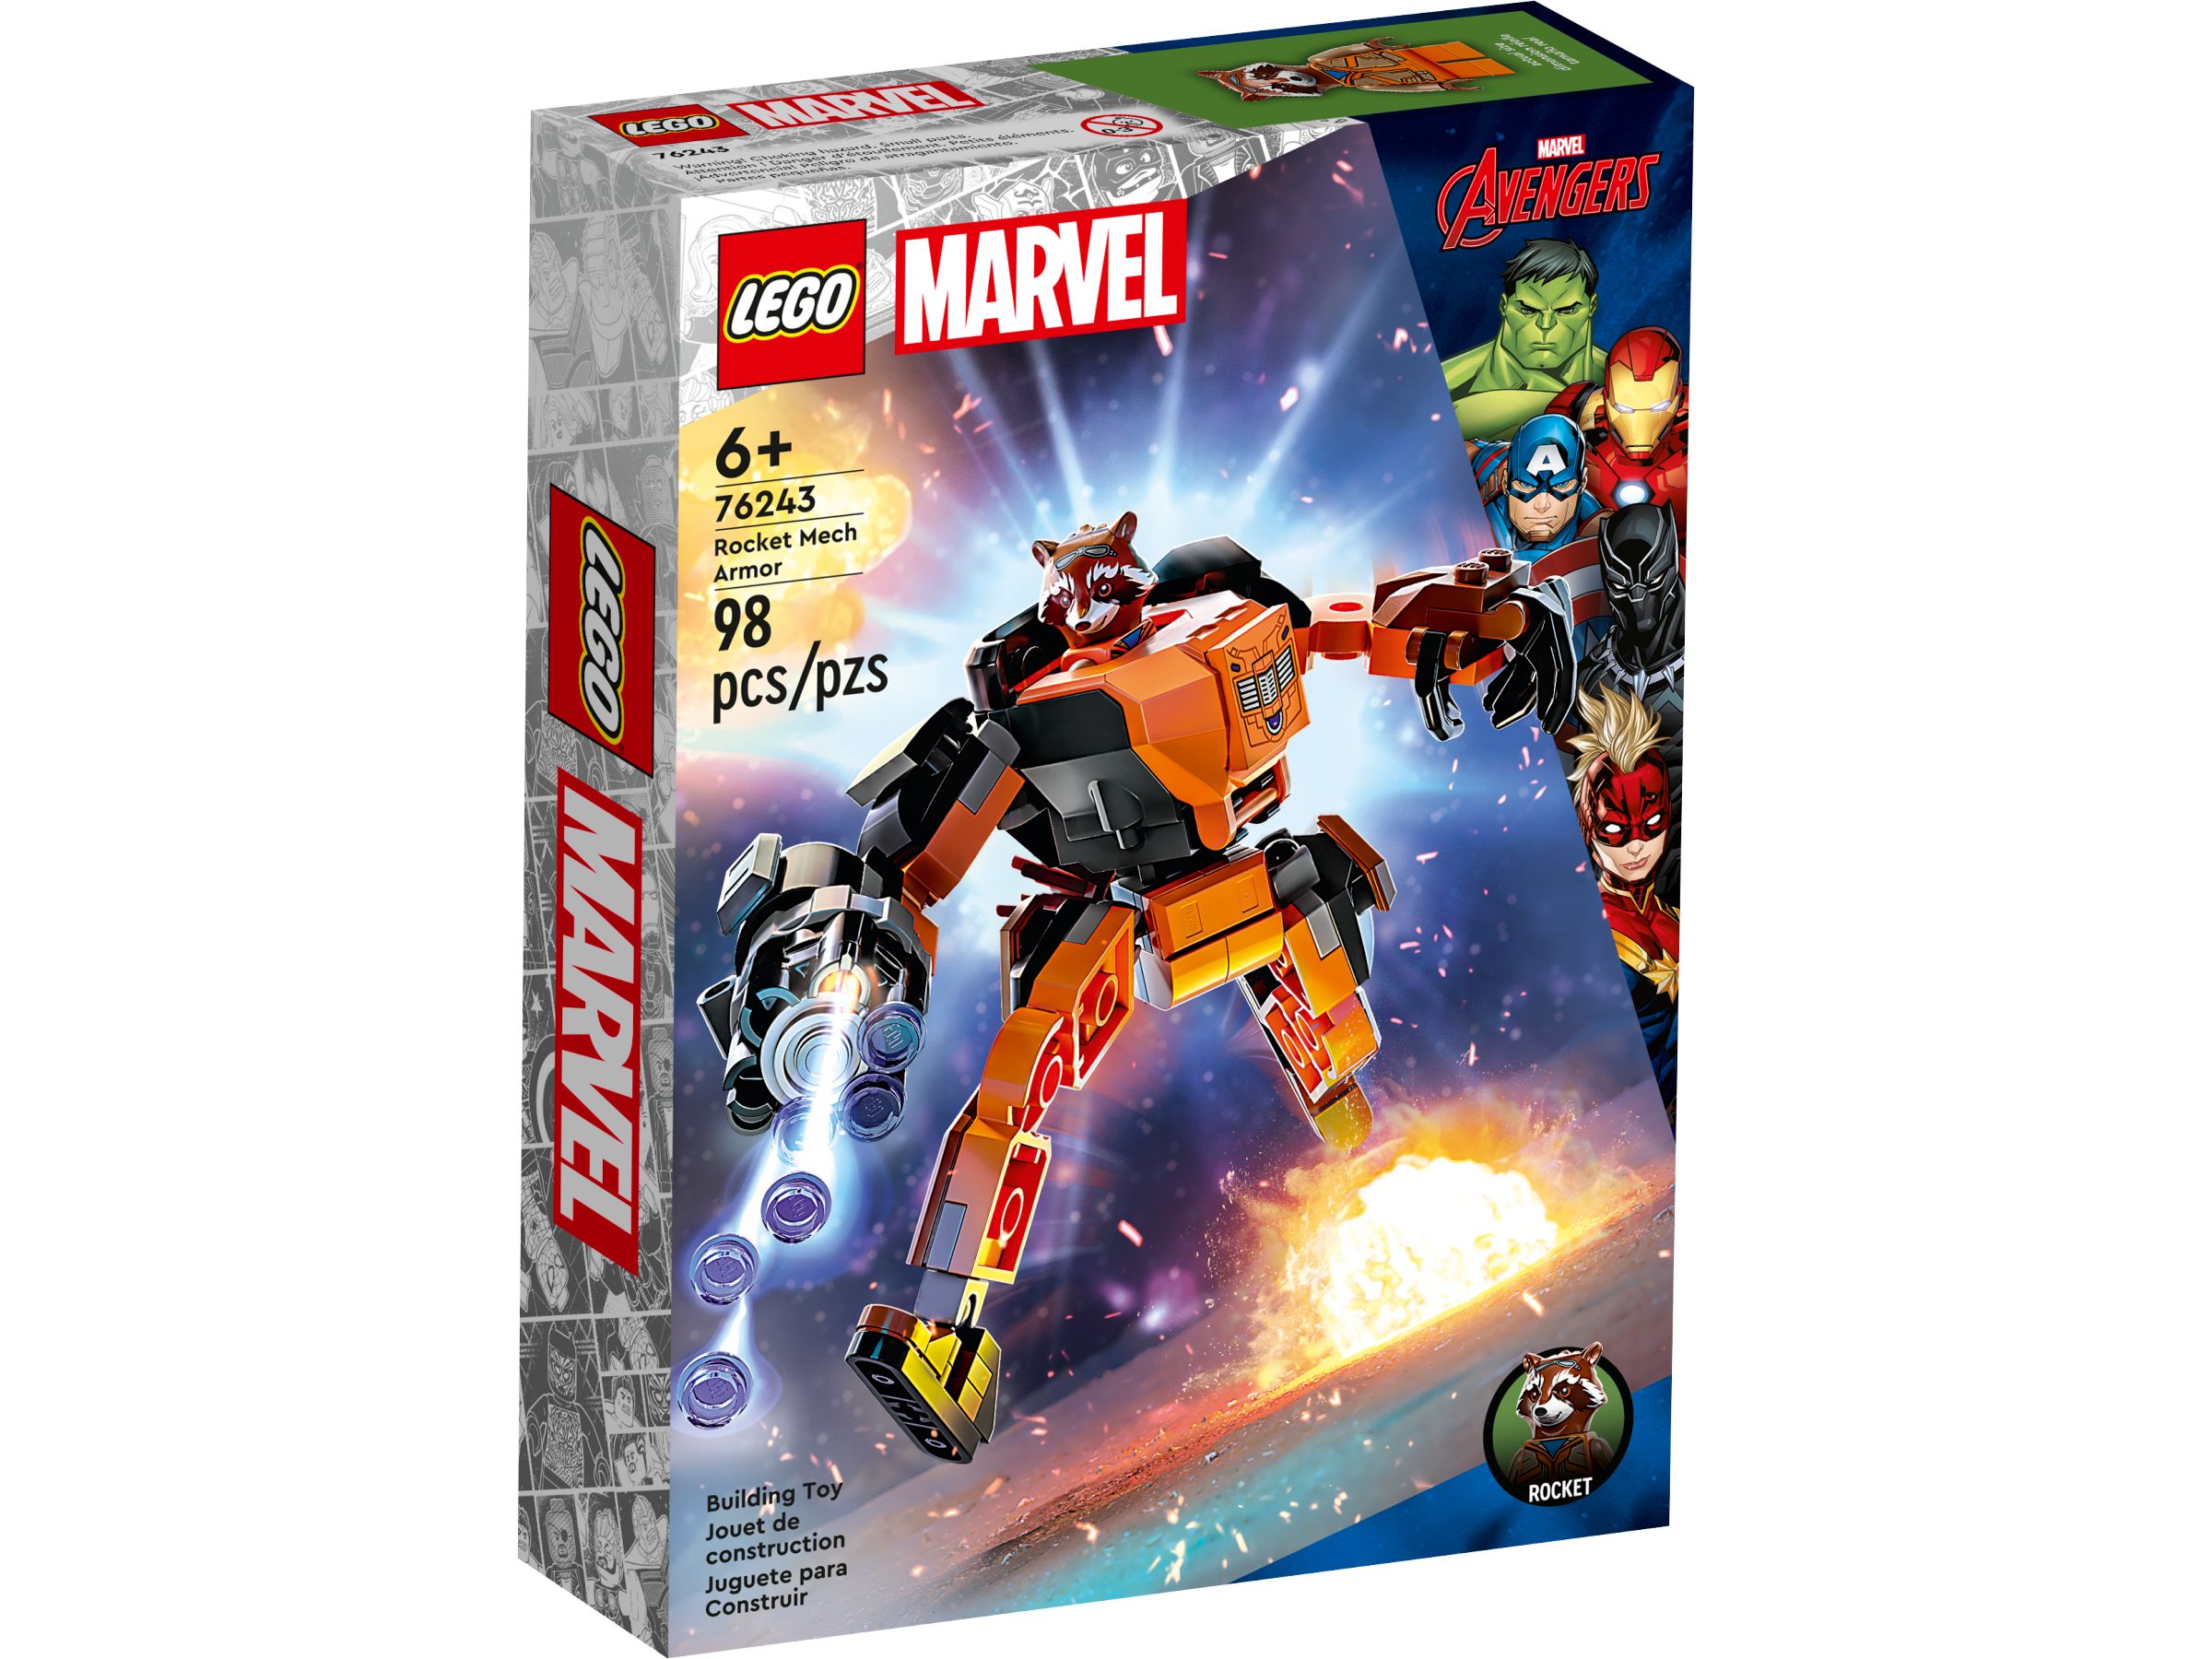 LEGO Super Heroes 76243 Rocket Mech LEGO_76243_alt1.jpg